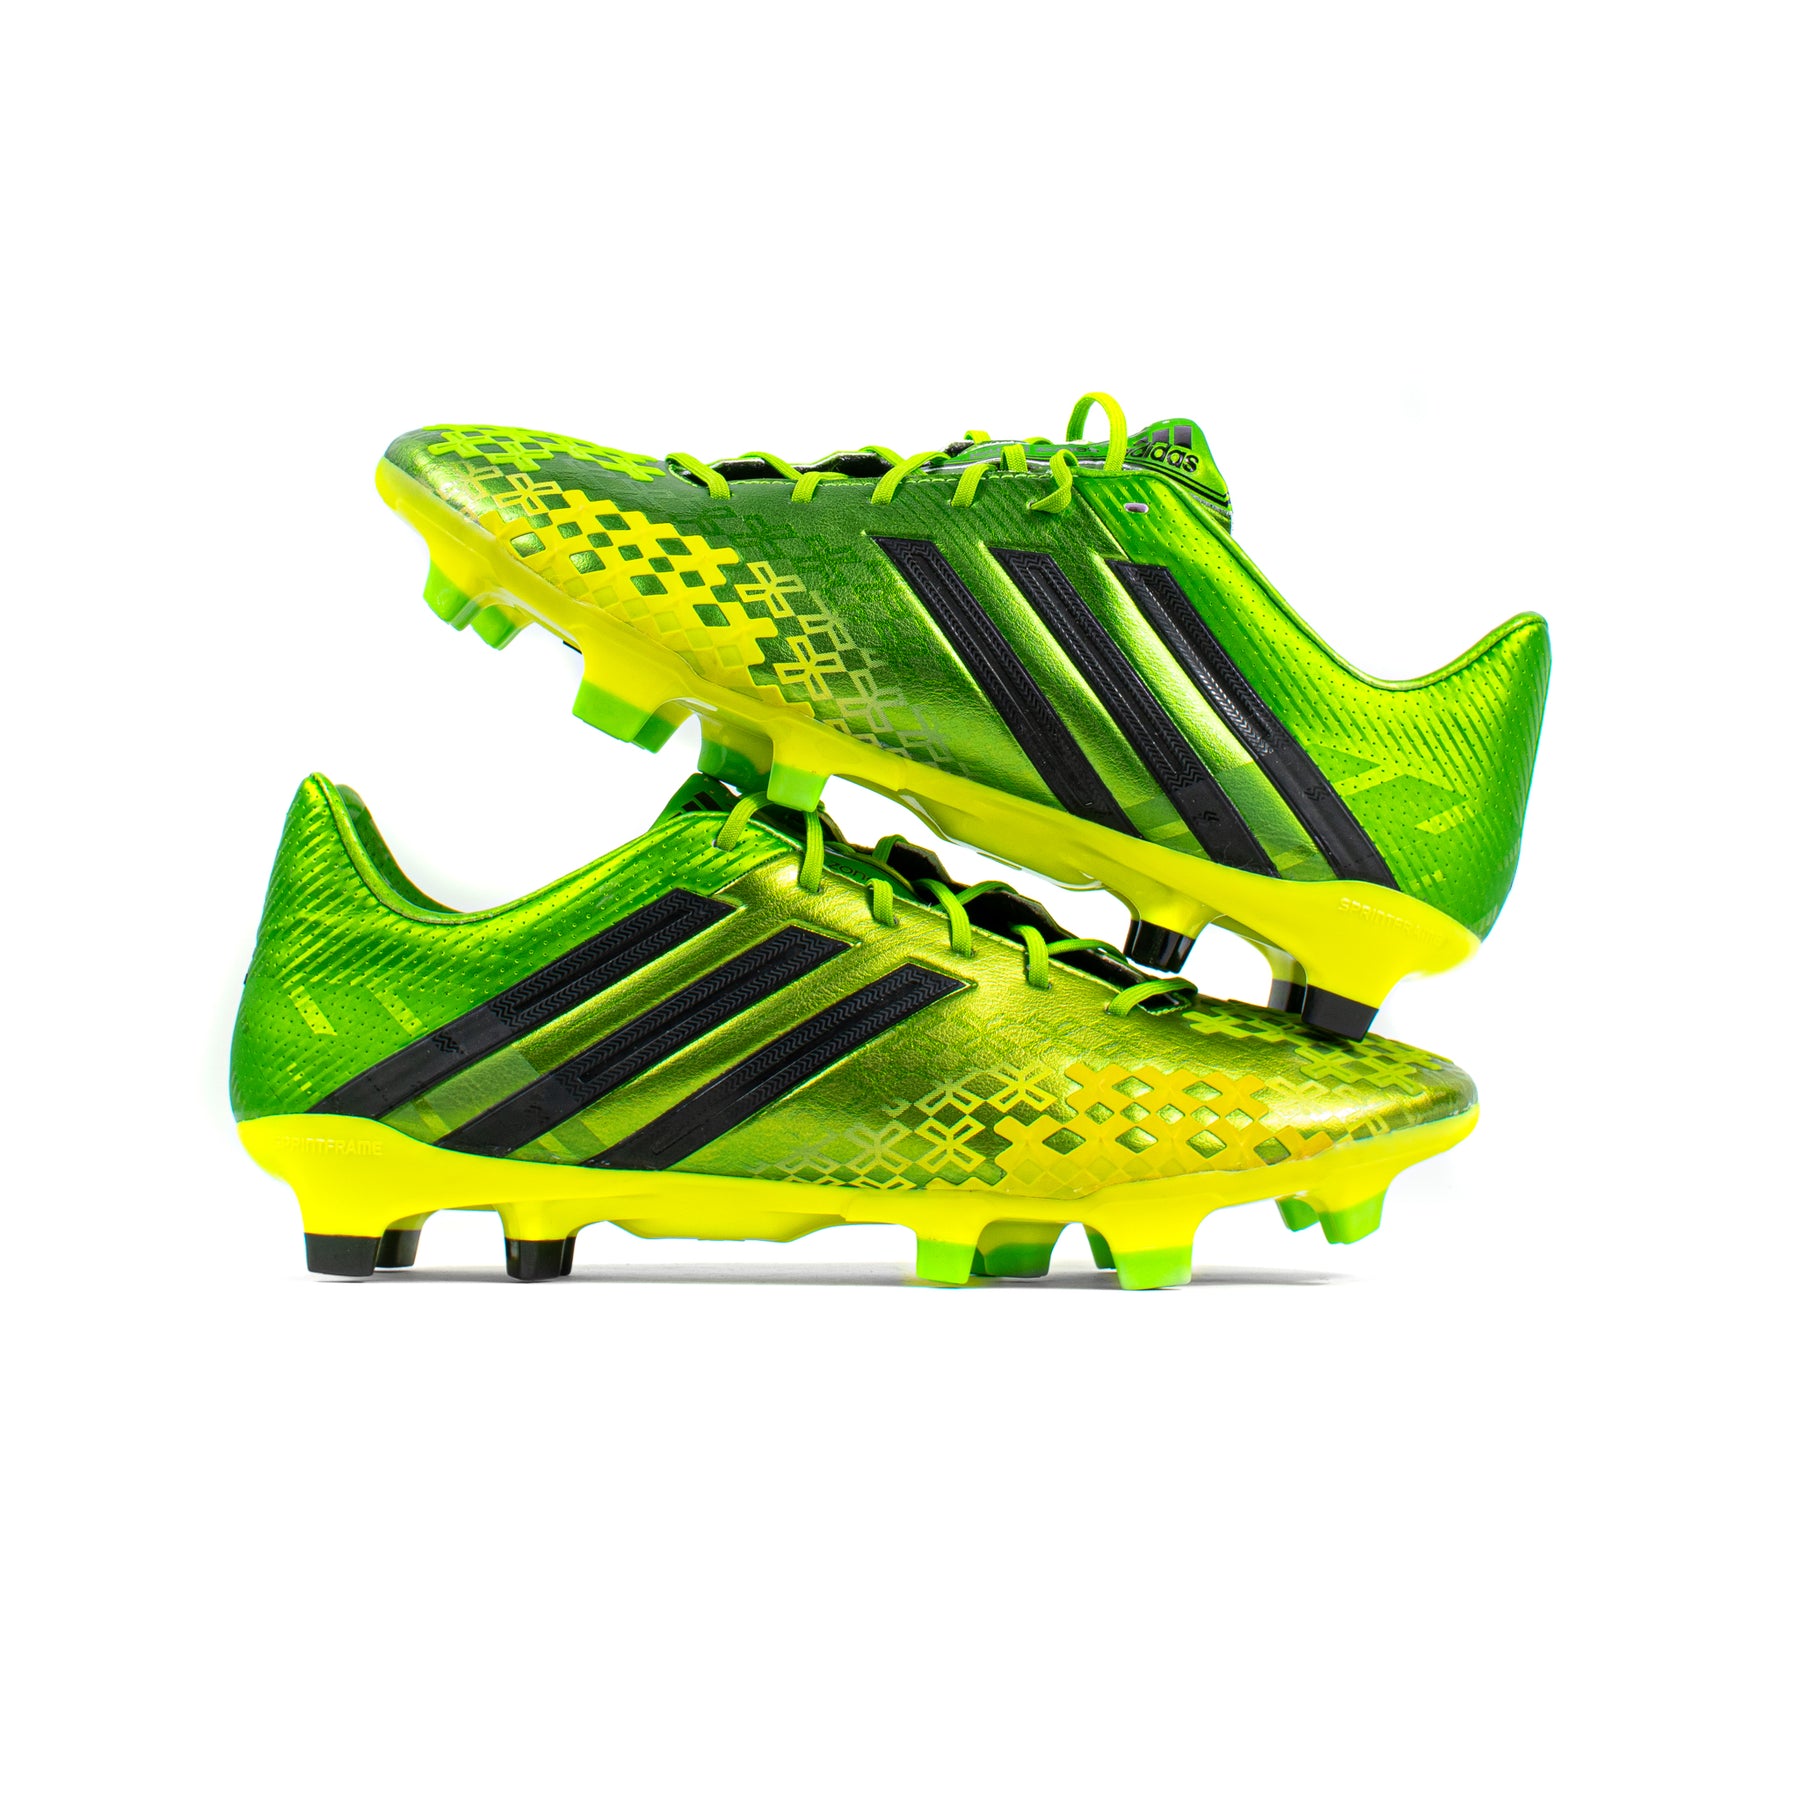 Adidas Predator LZ Zone II Green FG – Classic Soccer Cleats